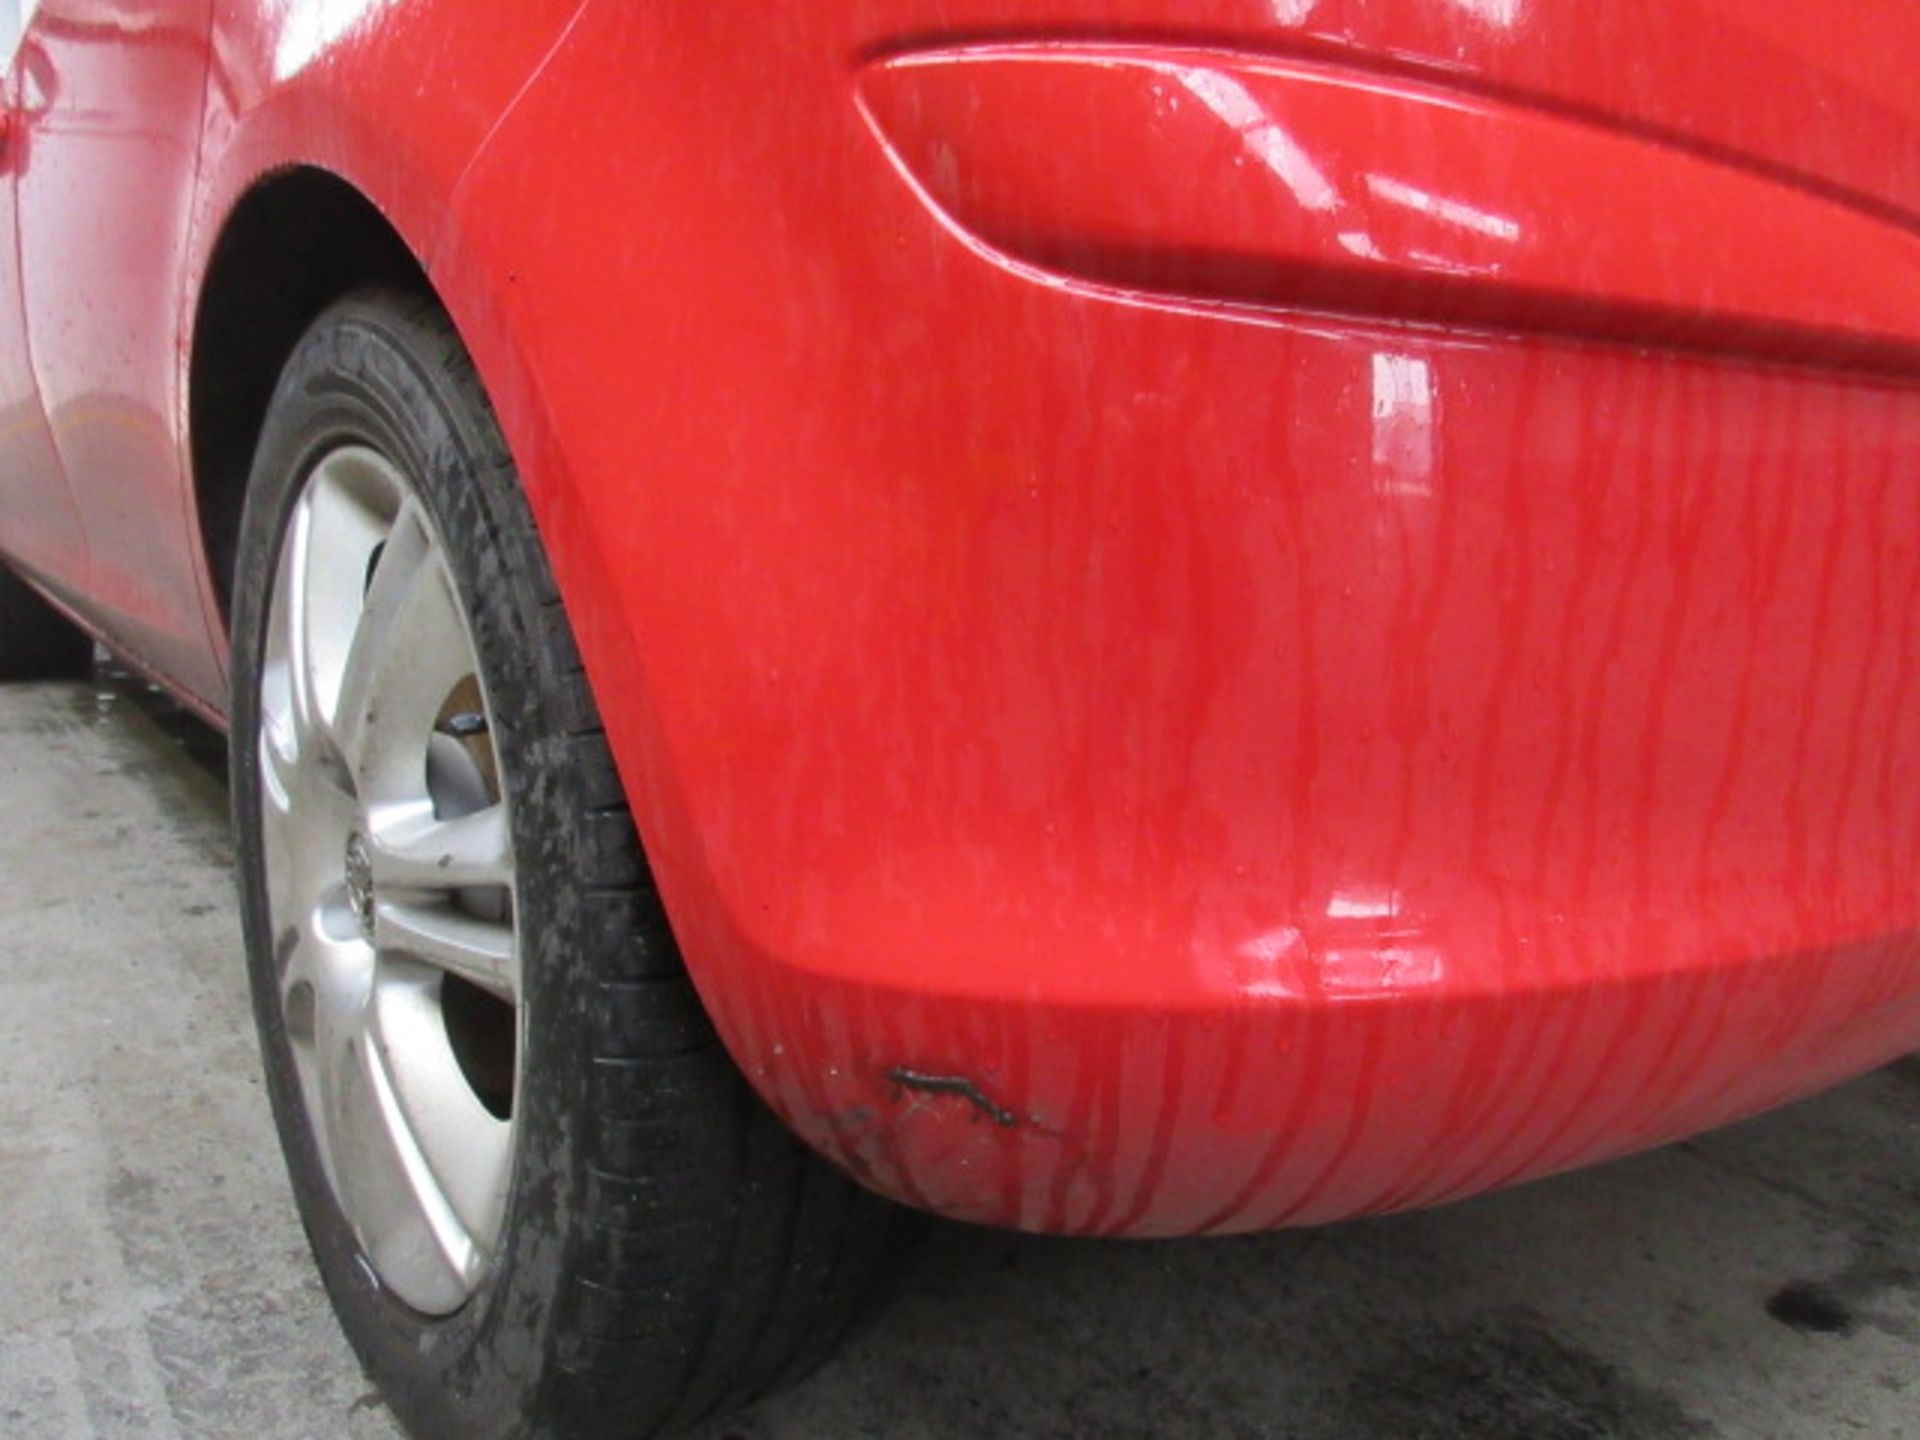 09 09 Vauxhall Corsa Design - Image 4 of 18